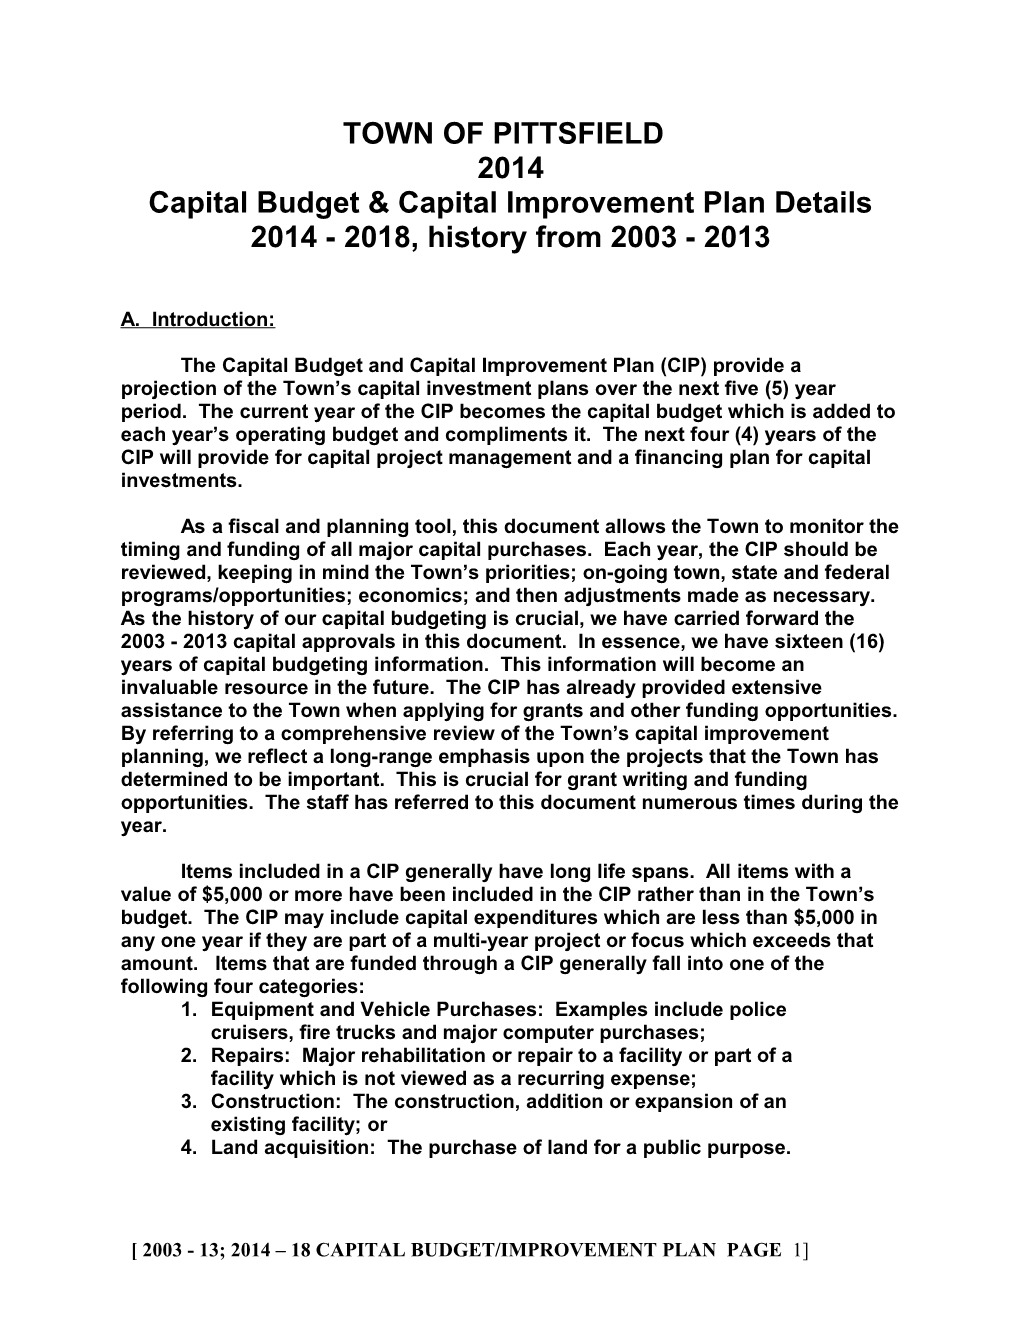 Capital Budget & Capital Improvement Plan Details